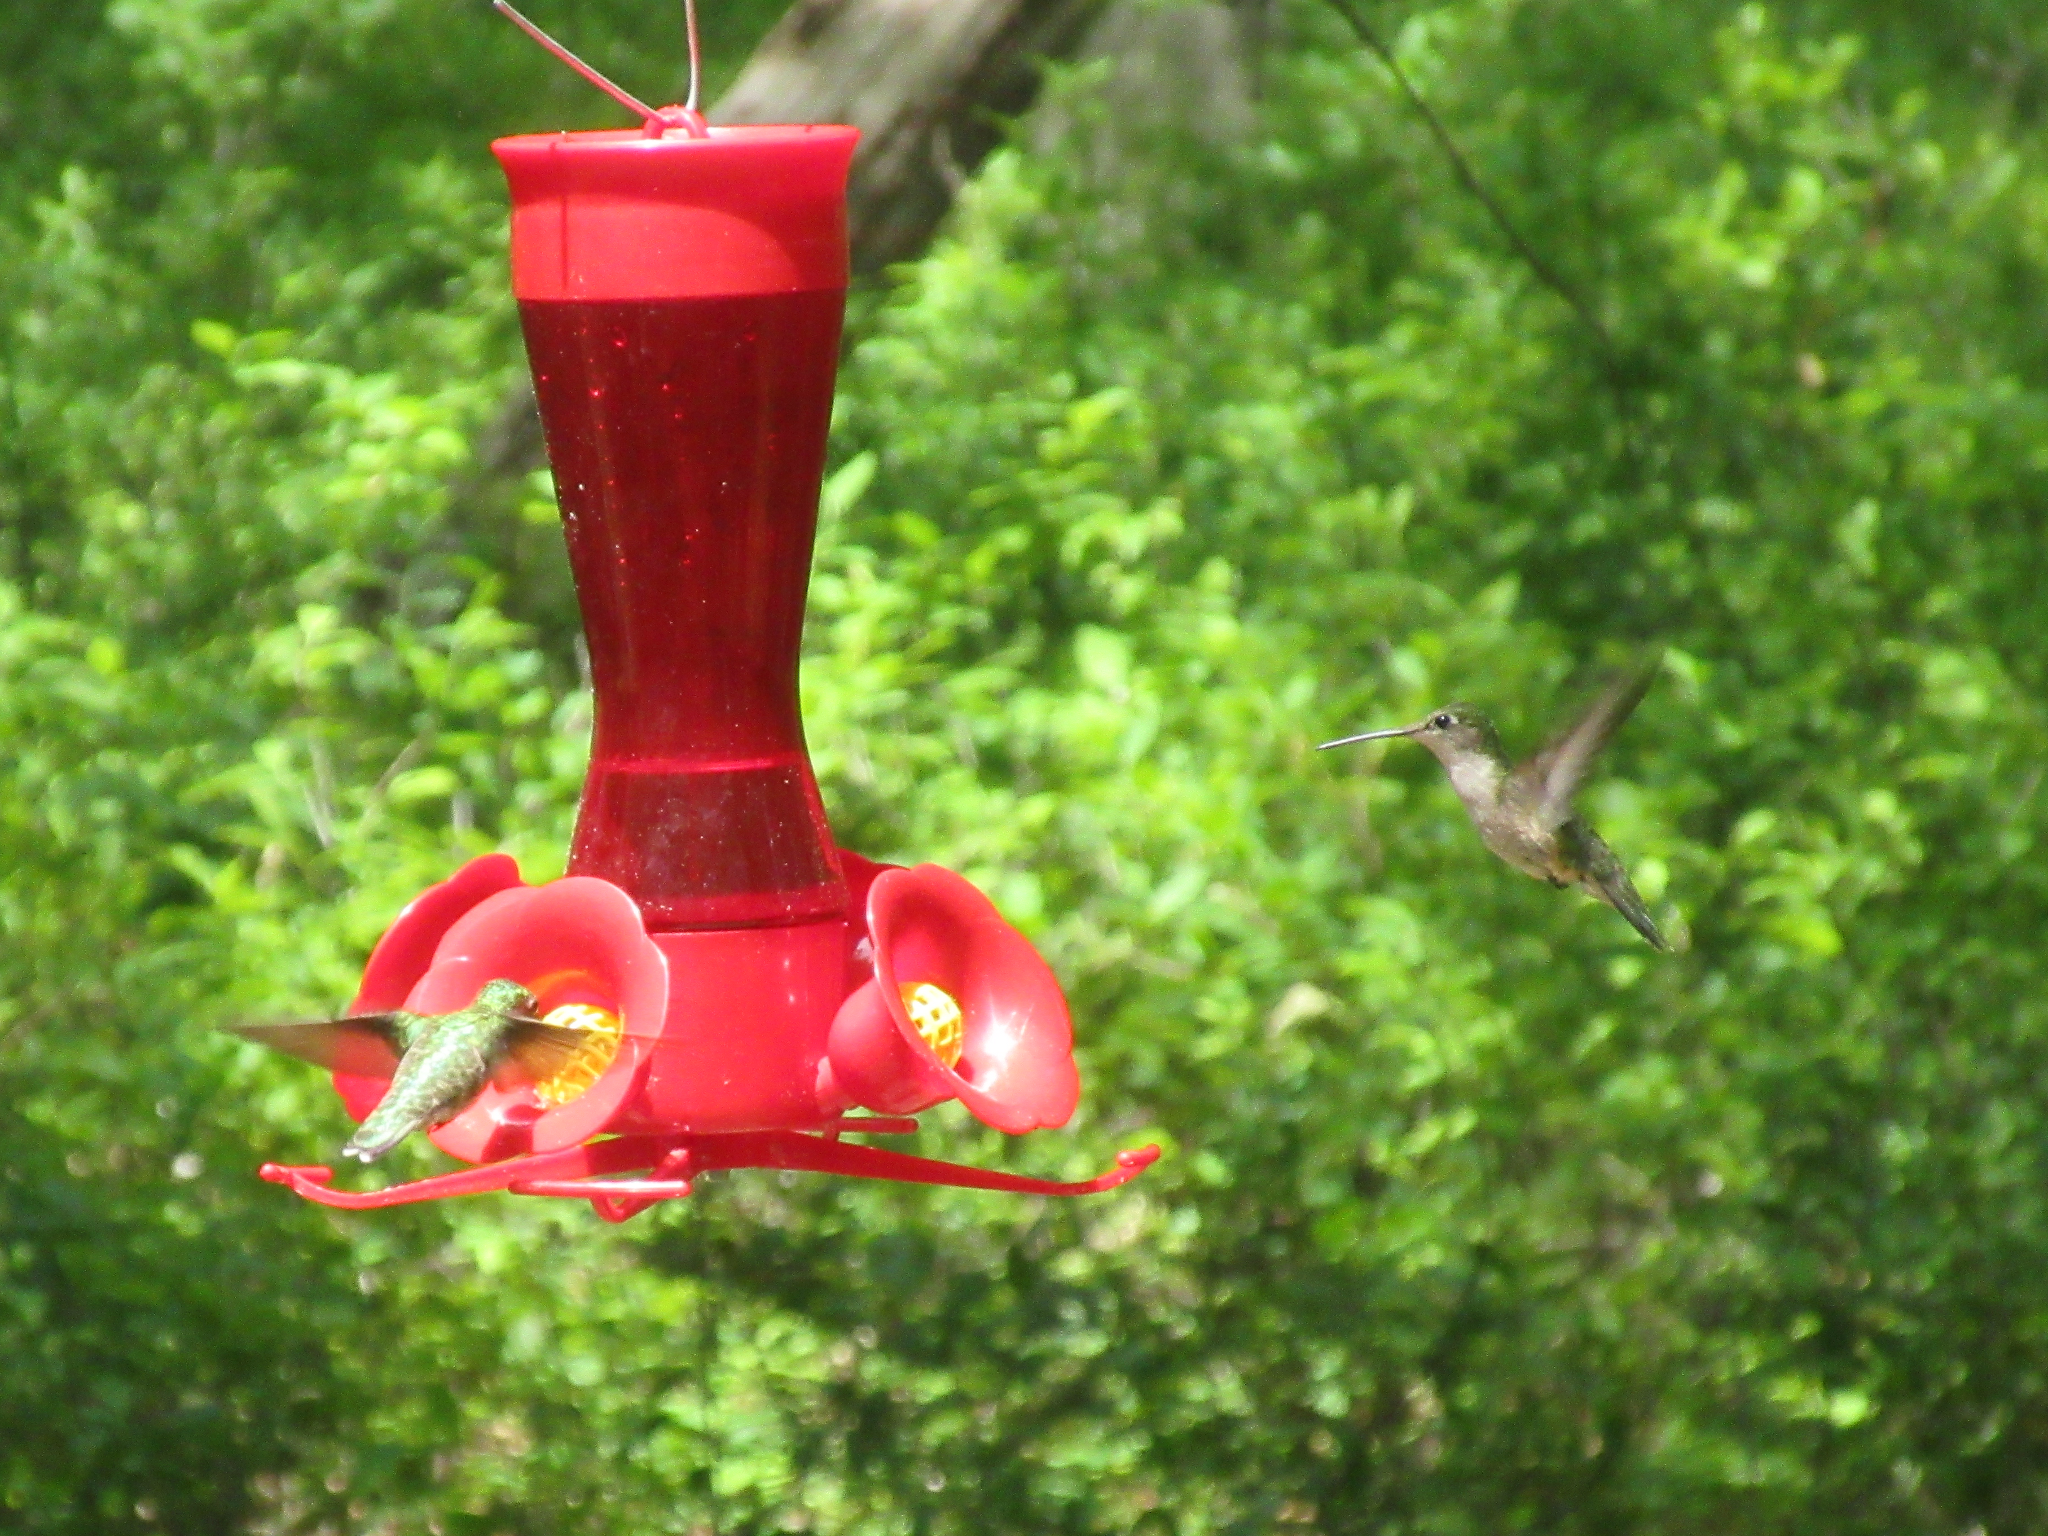 Two hummingbirds